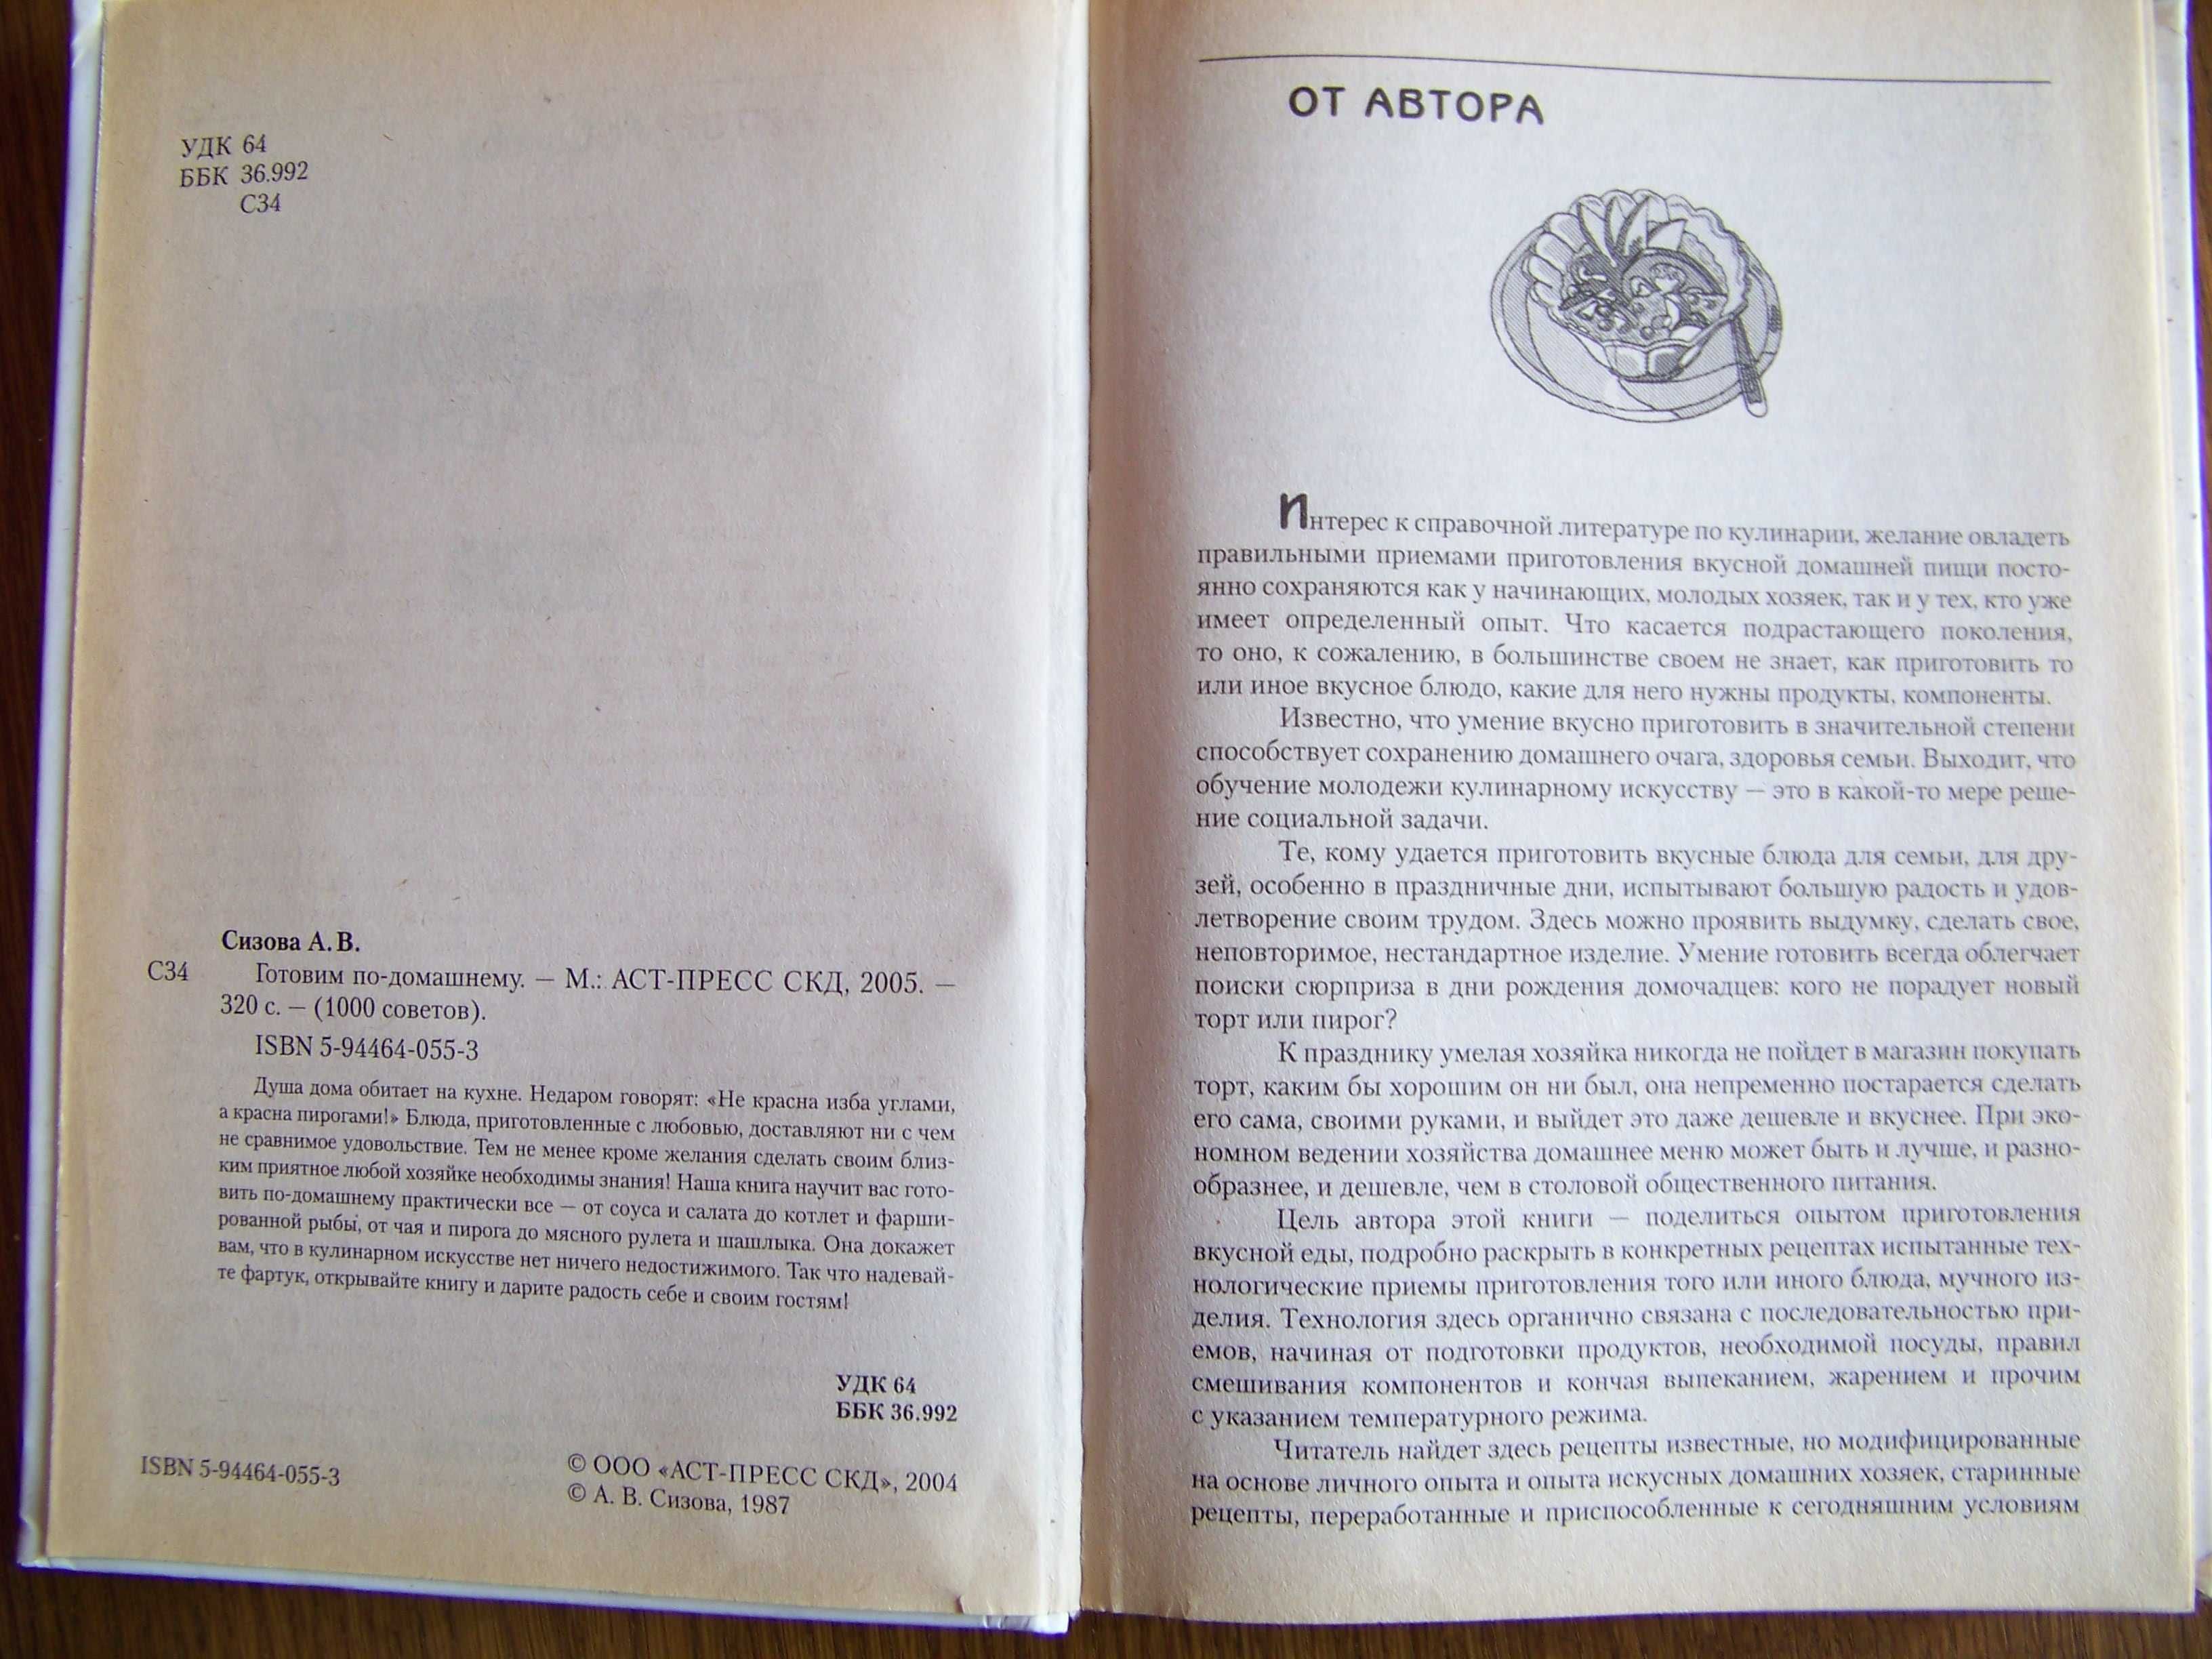 Книга Готовим по-домашнему А.Сизова 2005г